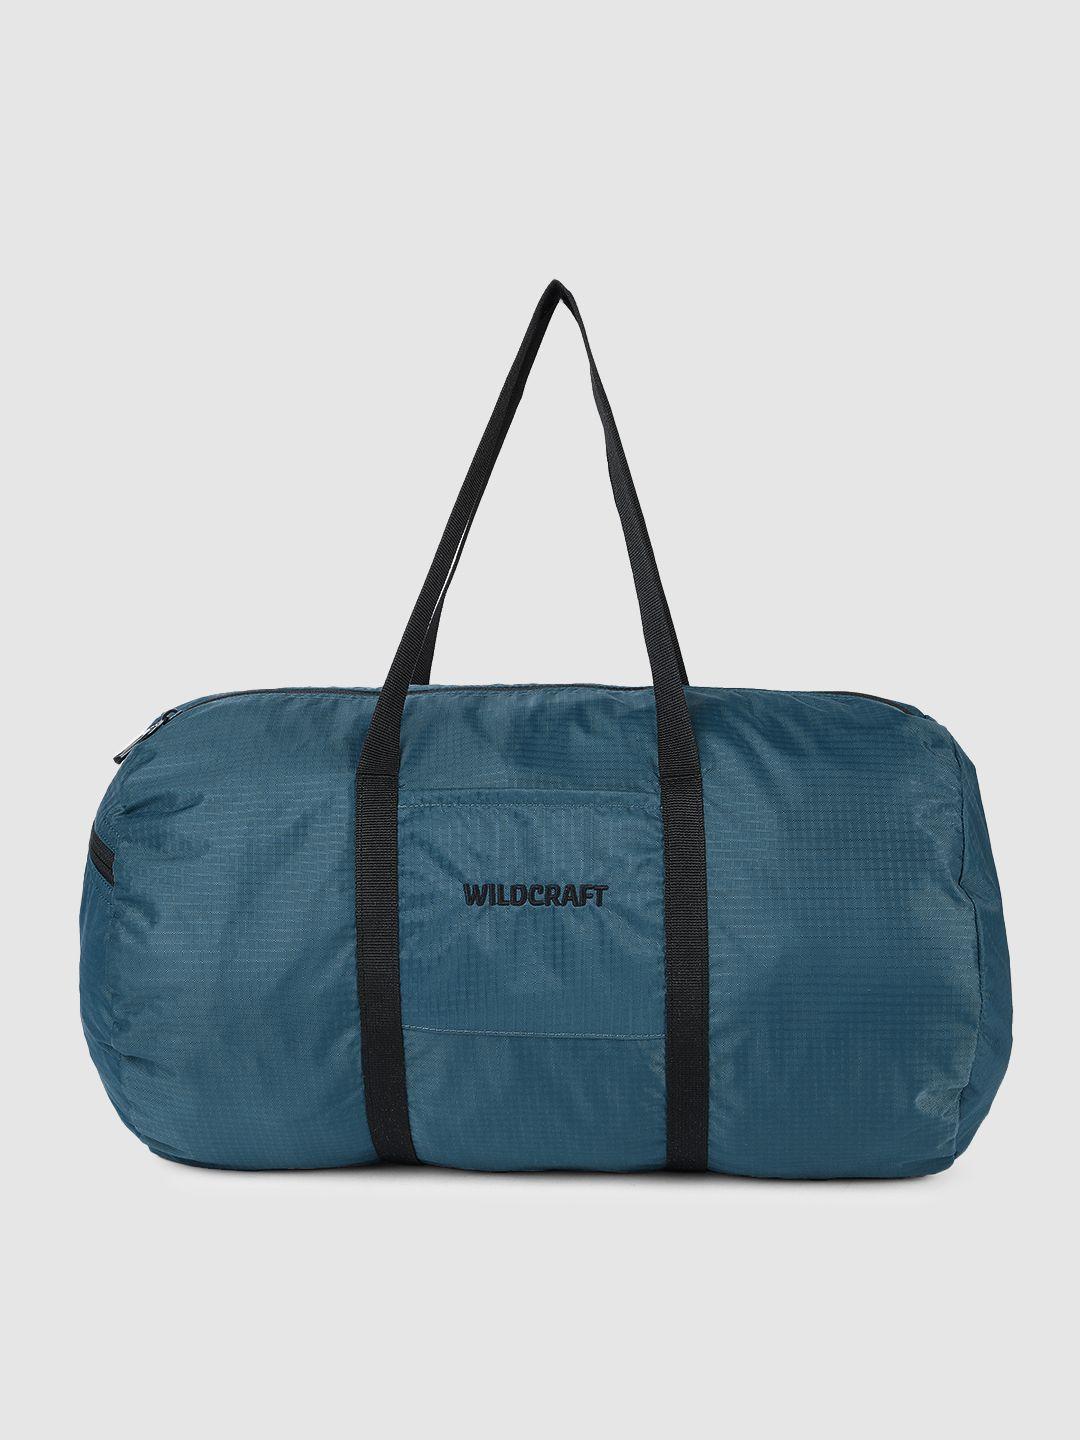 wildcraft unisex checked foldable duffel bag